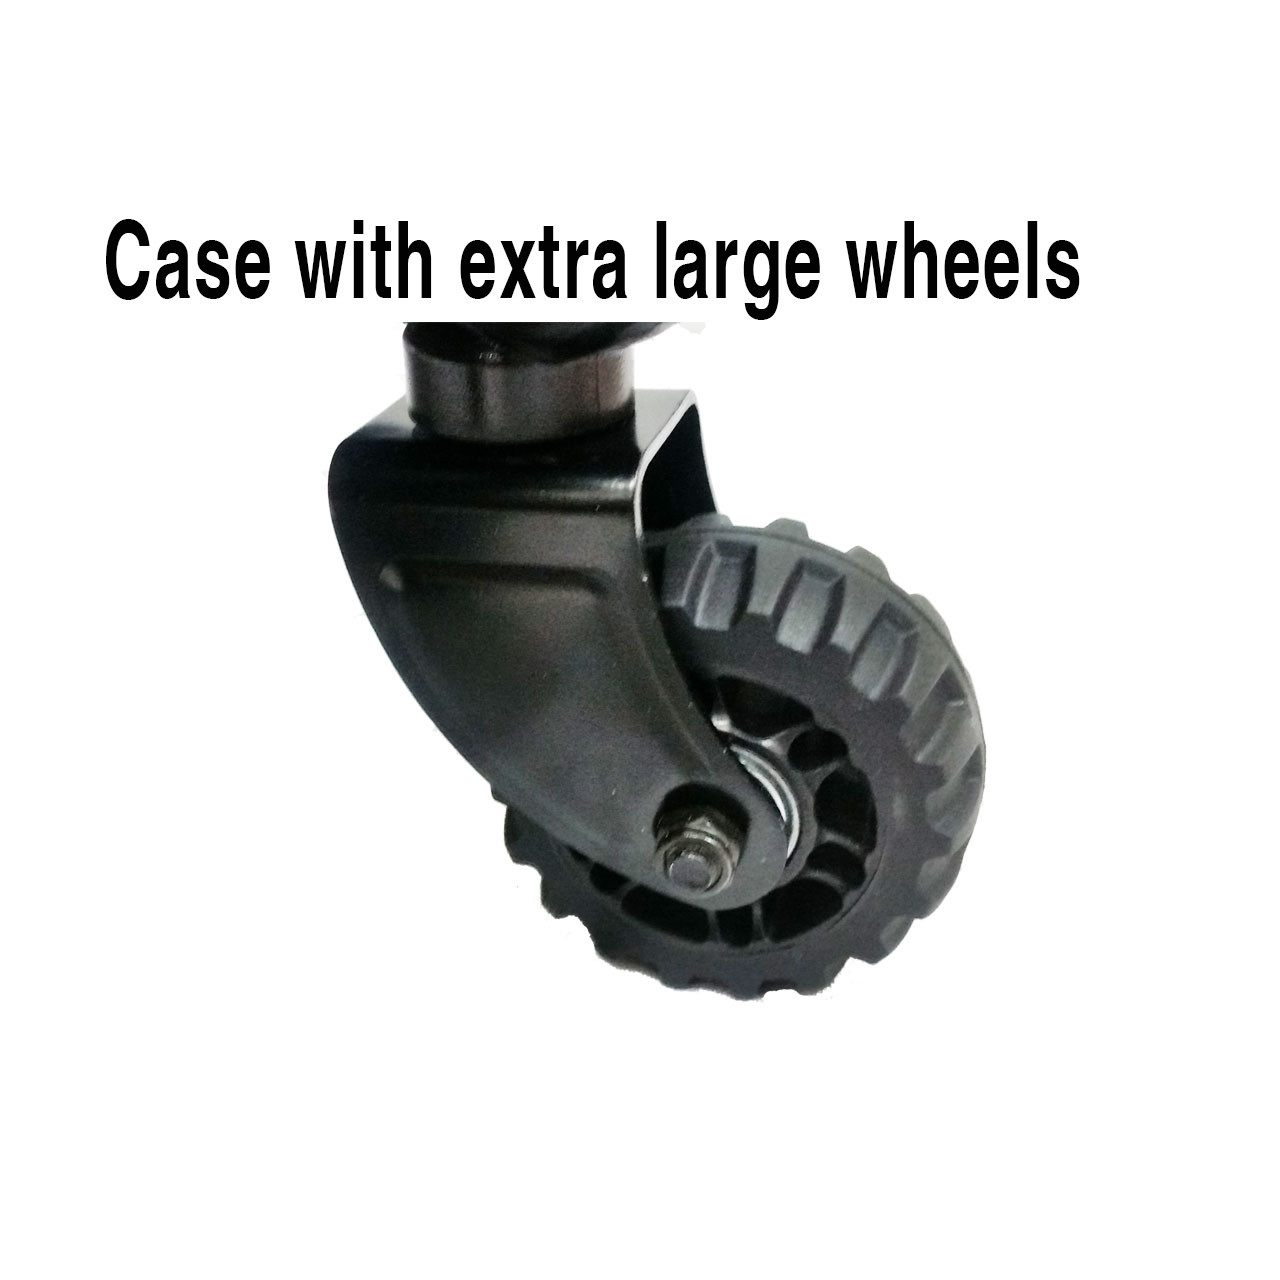 Large wheels